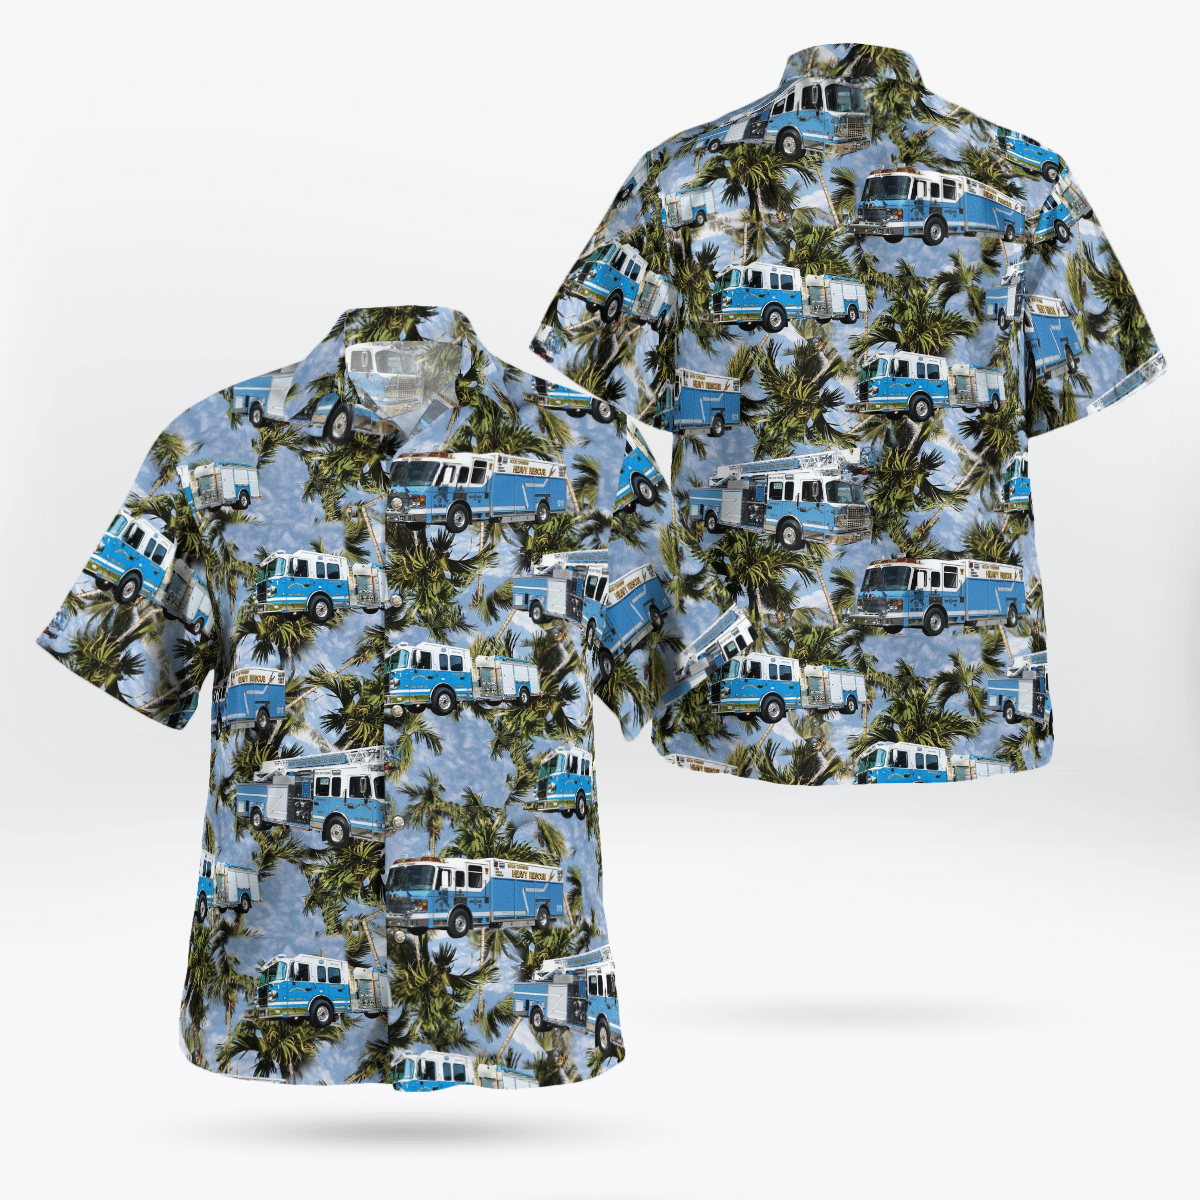 Why don't you order Hot Hawaiian Shirt today? 209